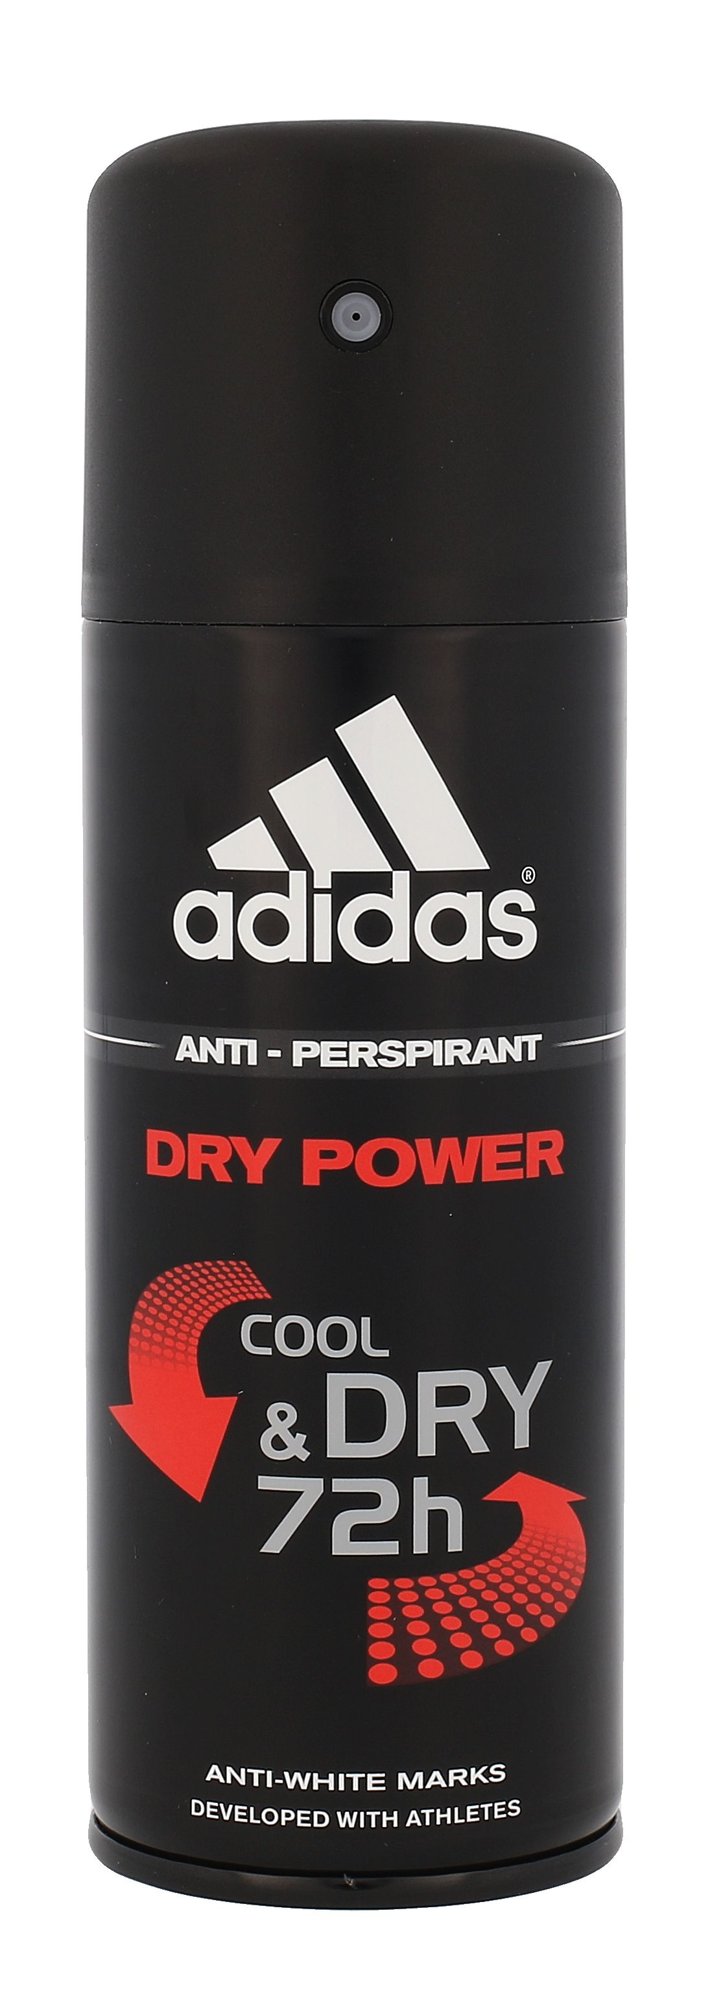 Adidas Dry Power Cool & Dry 72h